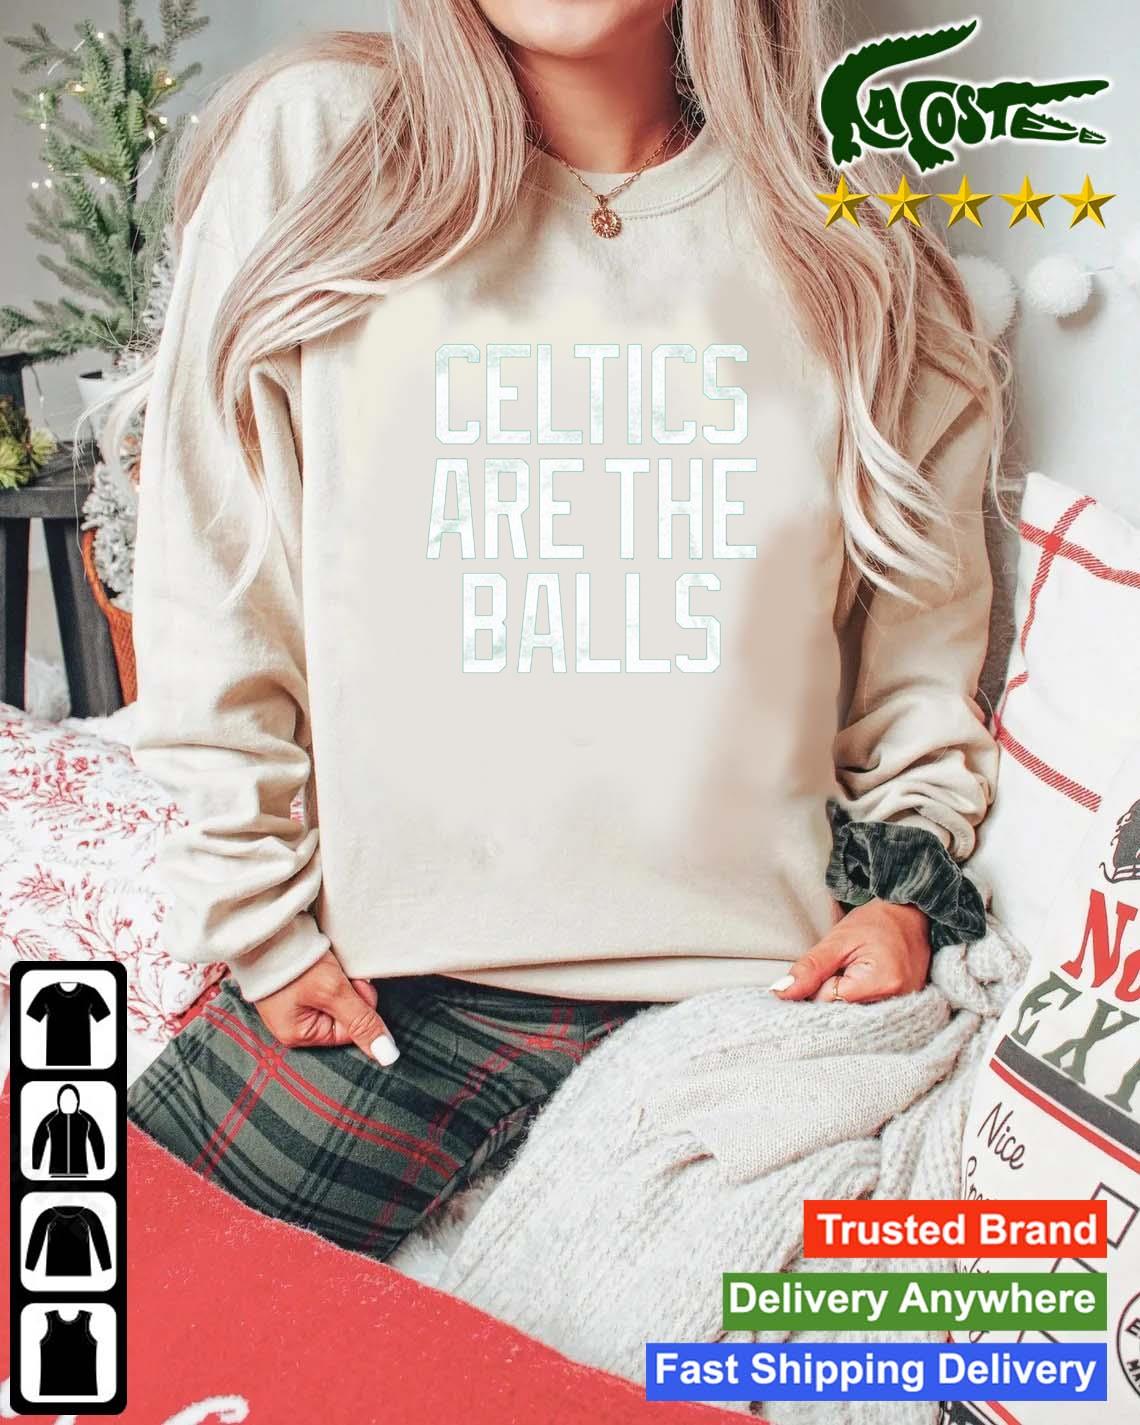 Original Celtics Are The Balls Sweats Mockup Sweater